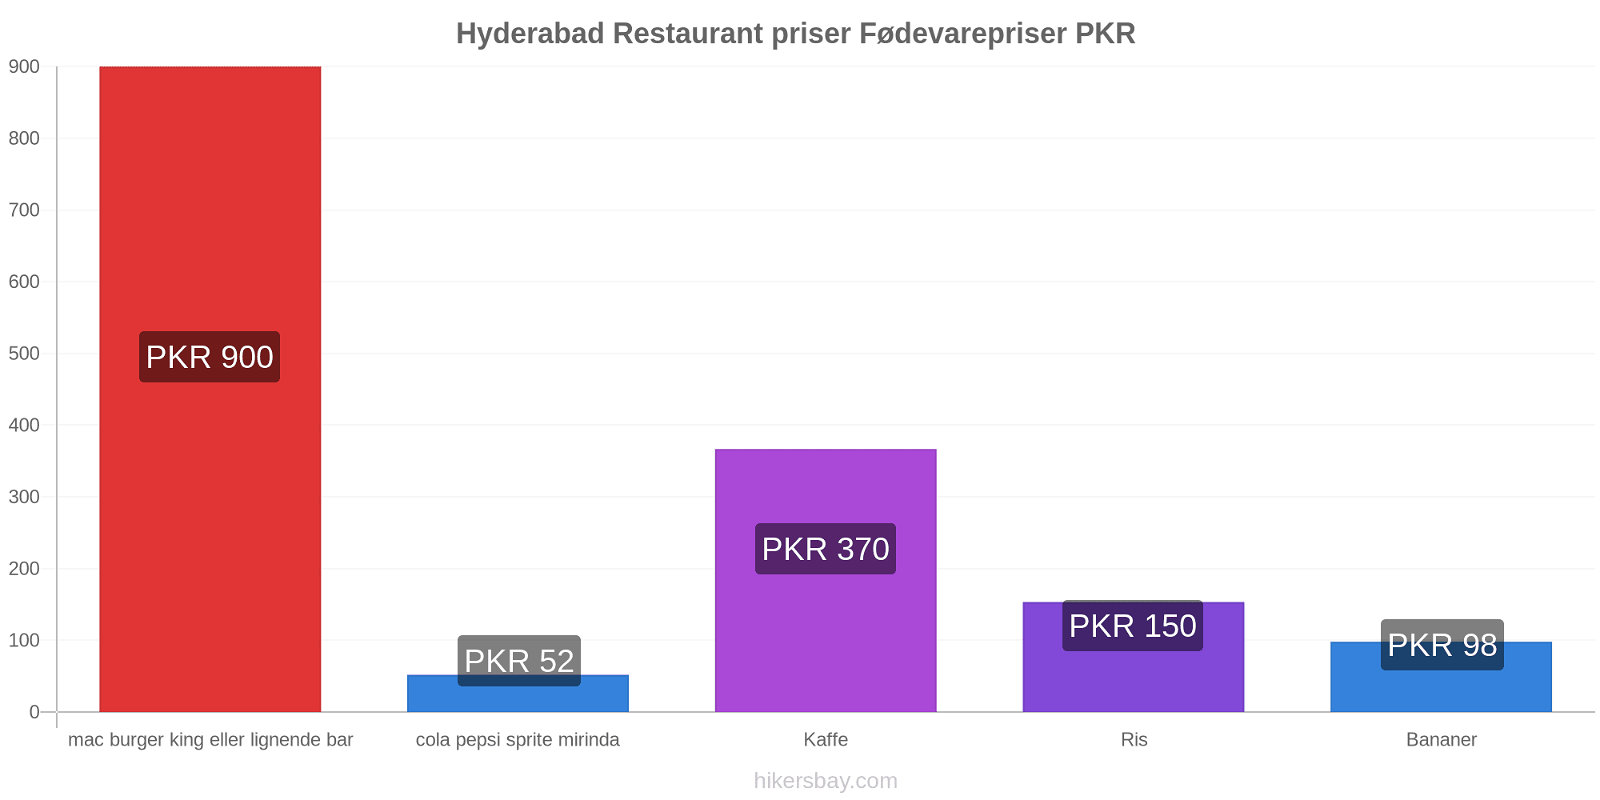 Hyderabad prisændringer hikersbay.com